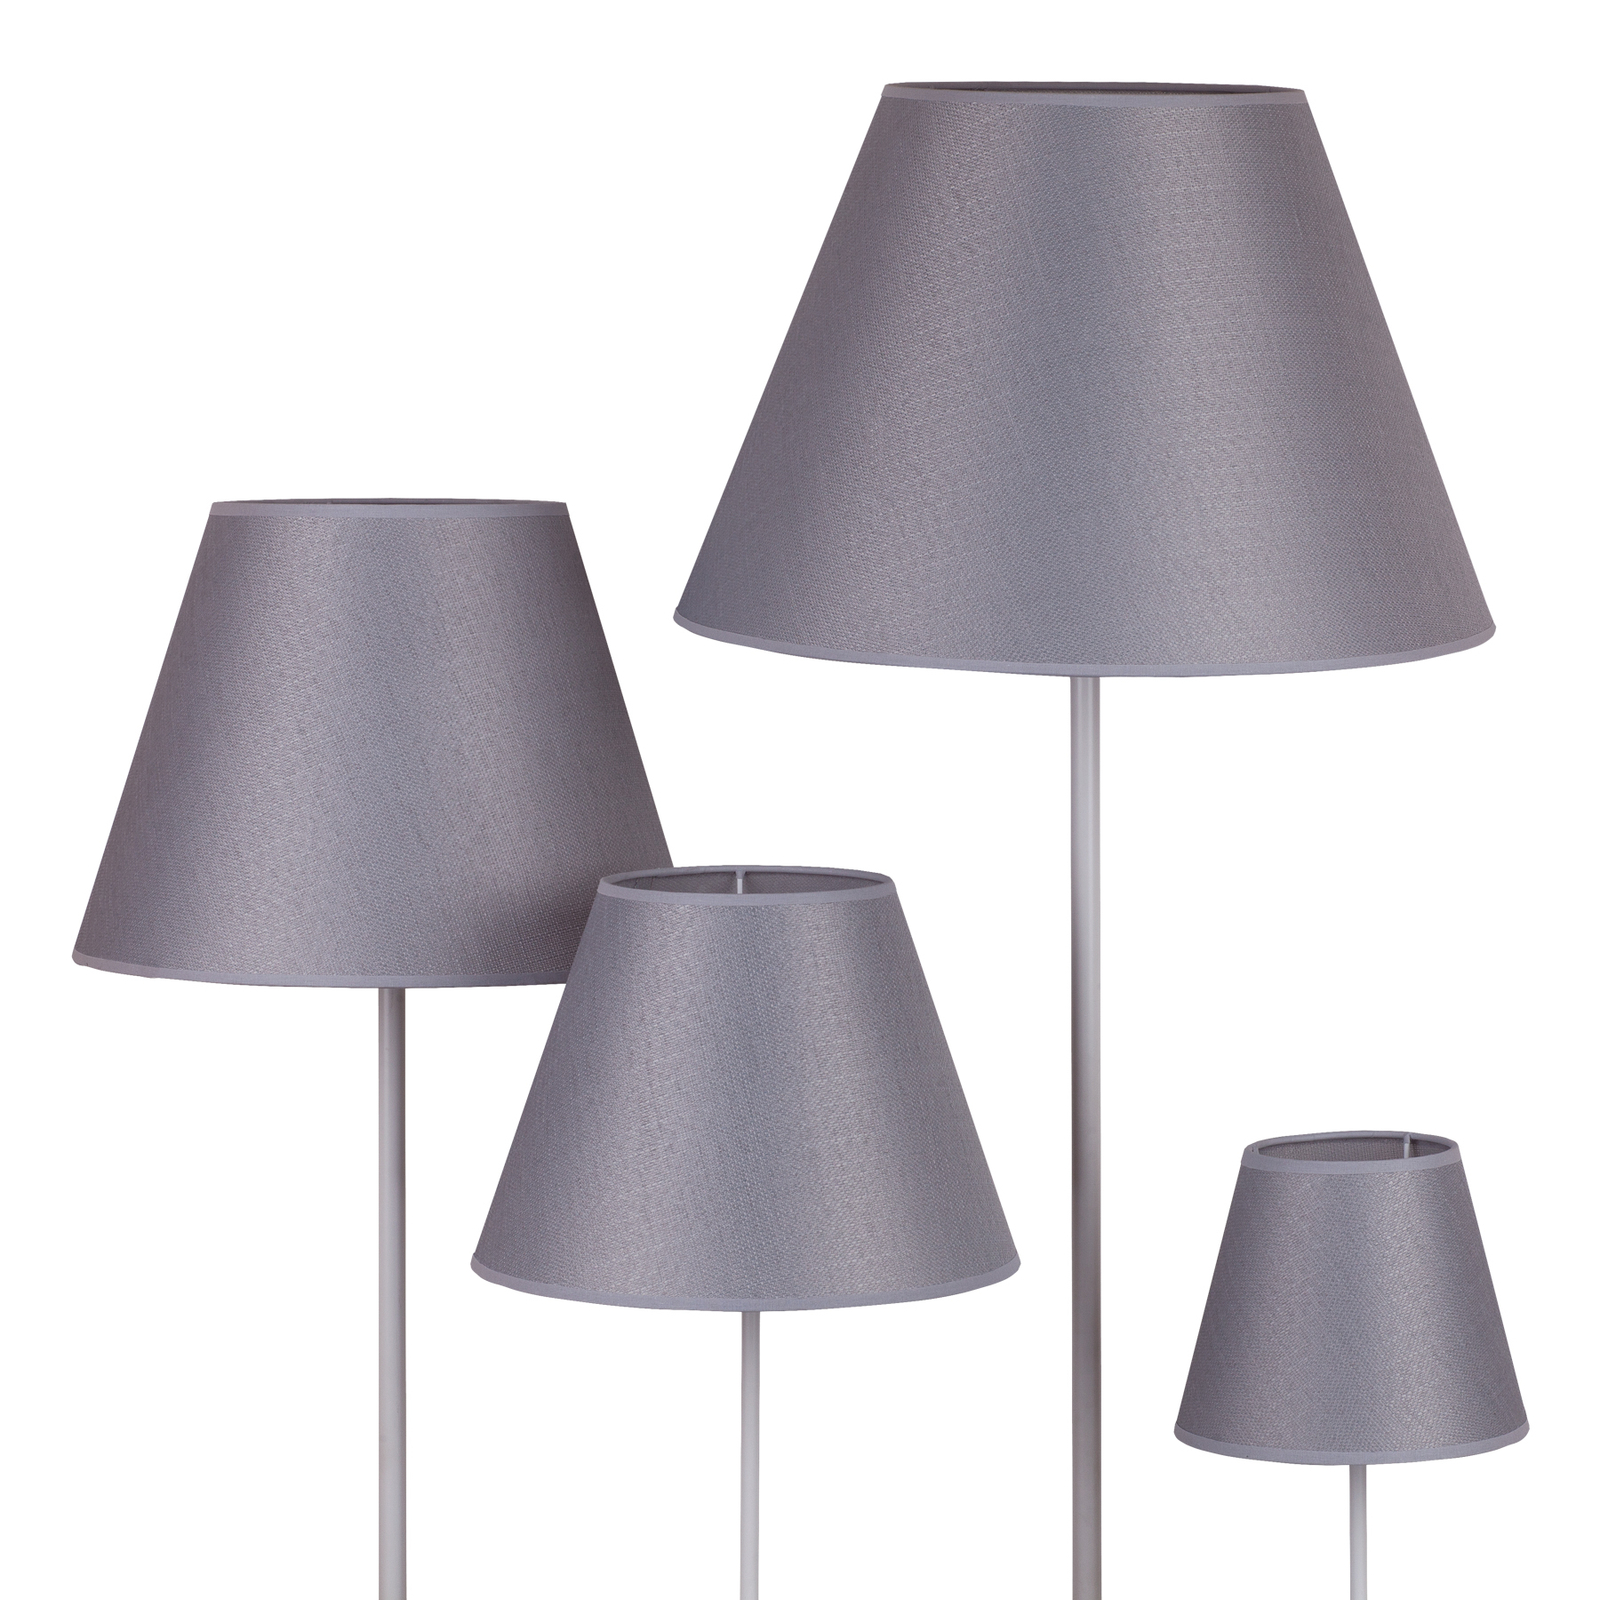 Sofia lampshade height 31 cm, veroni grey